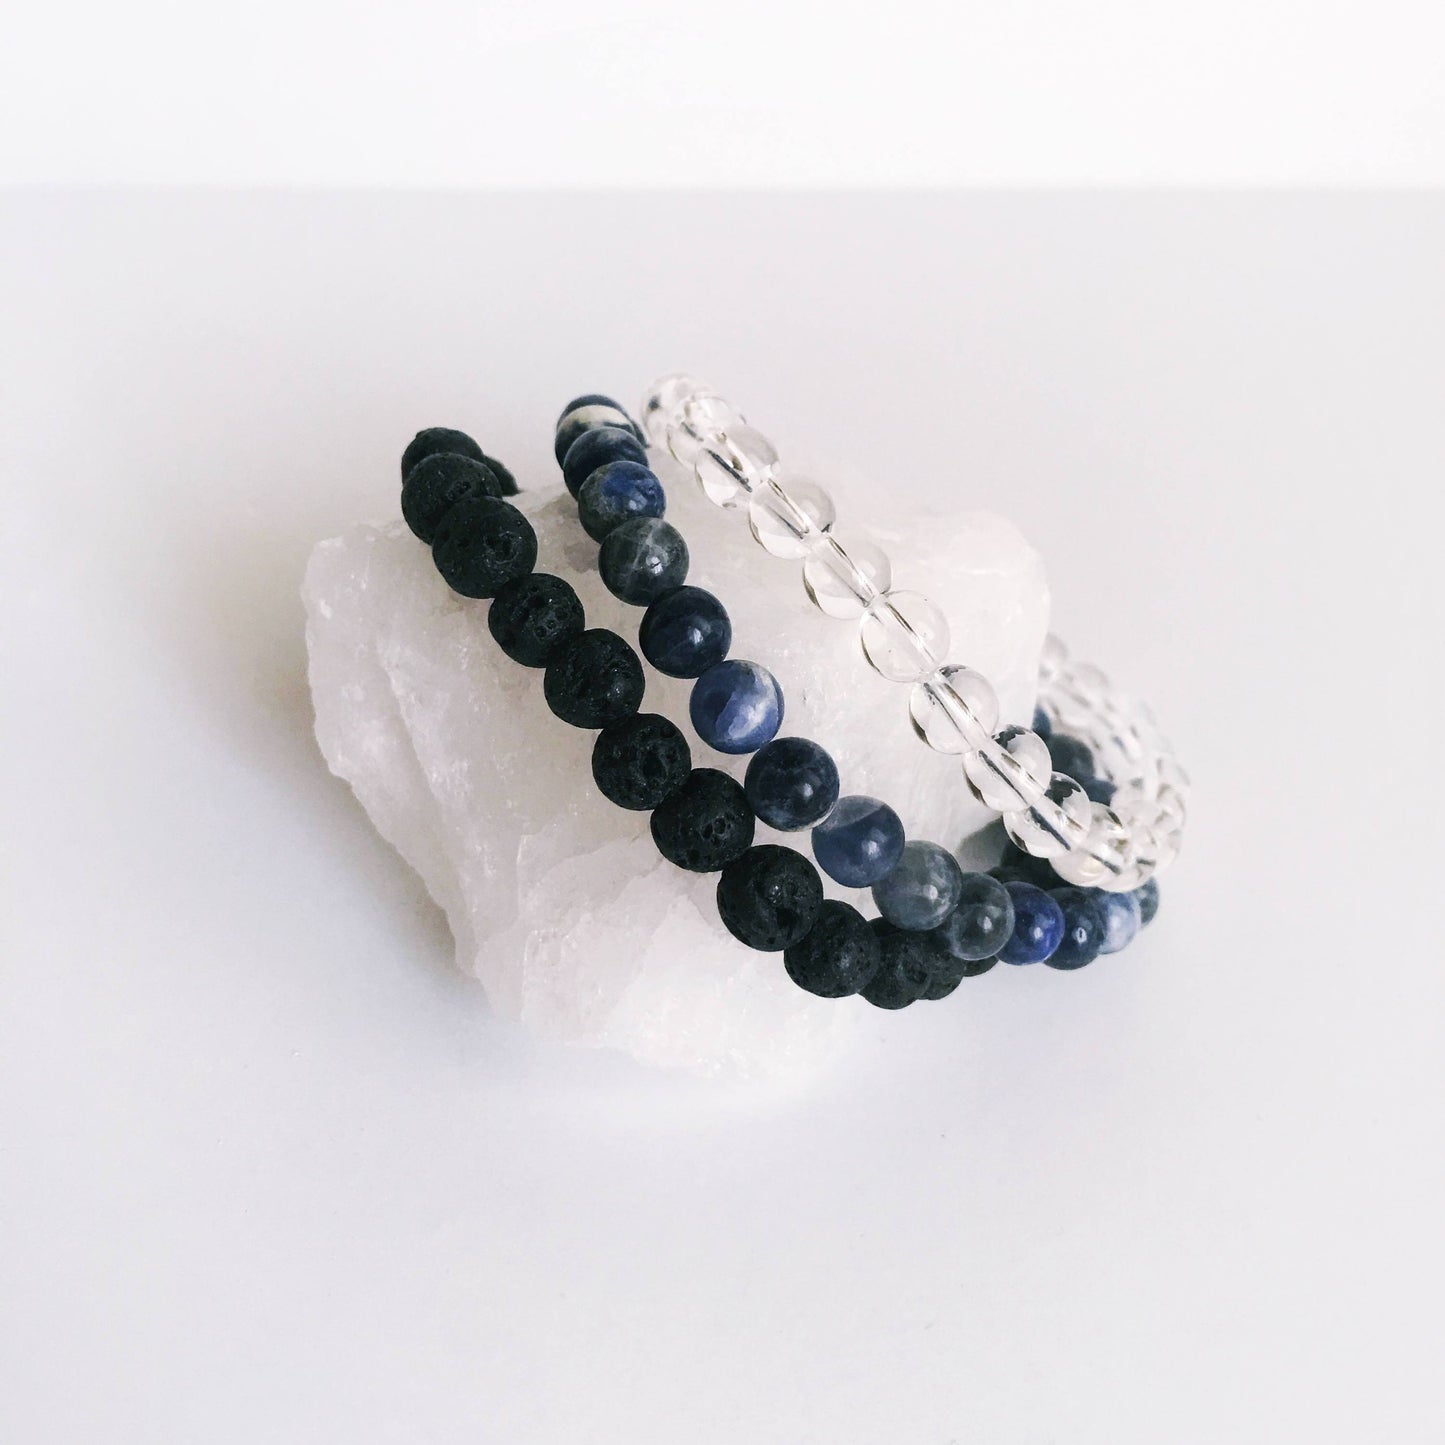 Crystal Quartz, Lava Bead & Sodalite Gemstone Bracelet Set